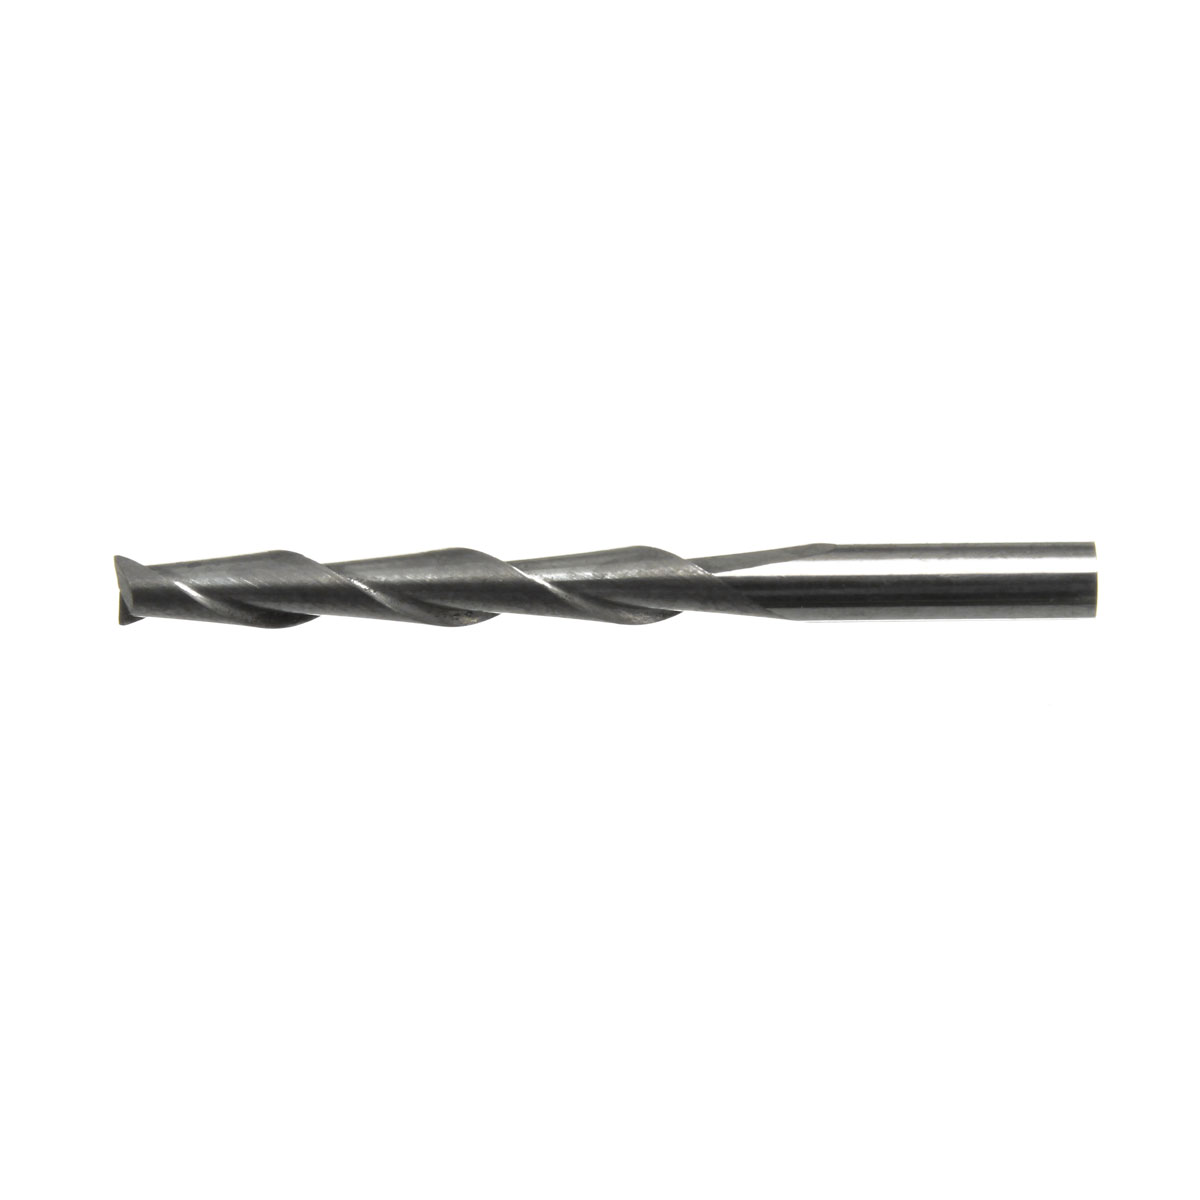 3175mm-Carbide-CNC-2-Flute-Spiral-Bits-End-Mill-Router-22mm-CEL-Milling-Cutter-974471-6